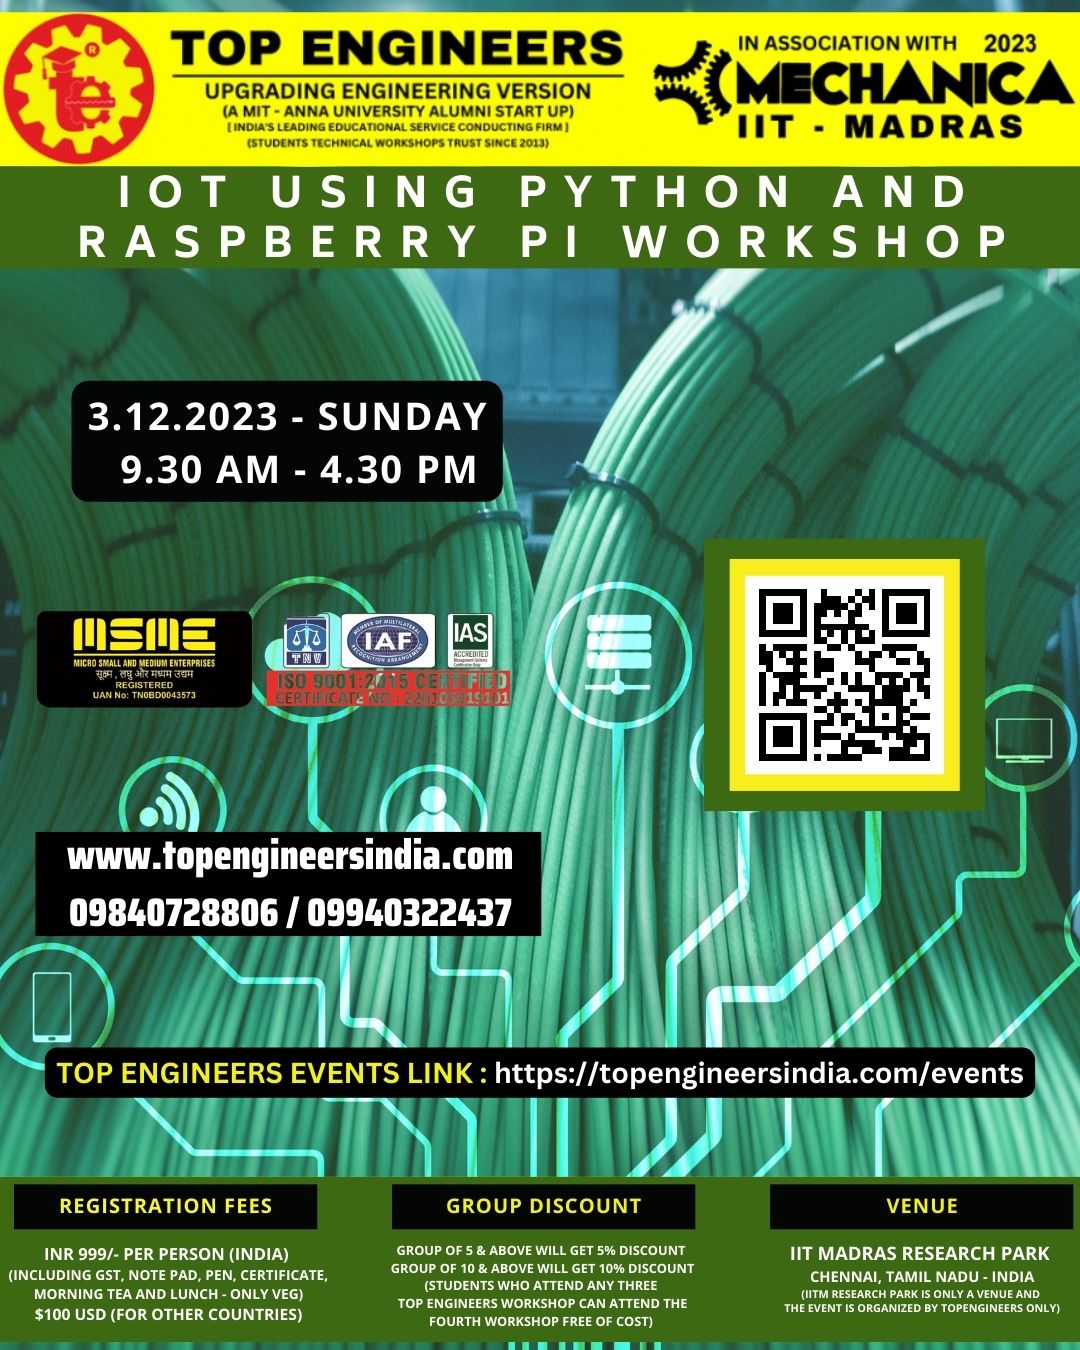 Iot using Python and Raspberry Pi Workshop 2023